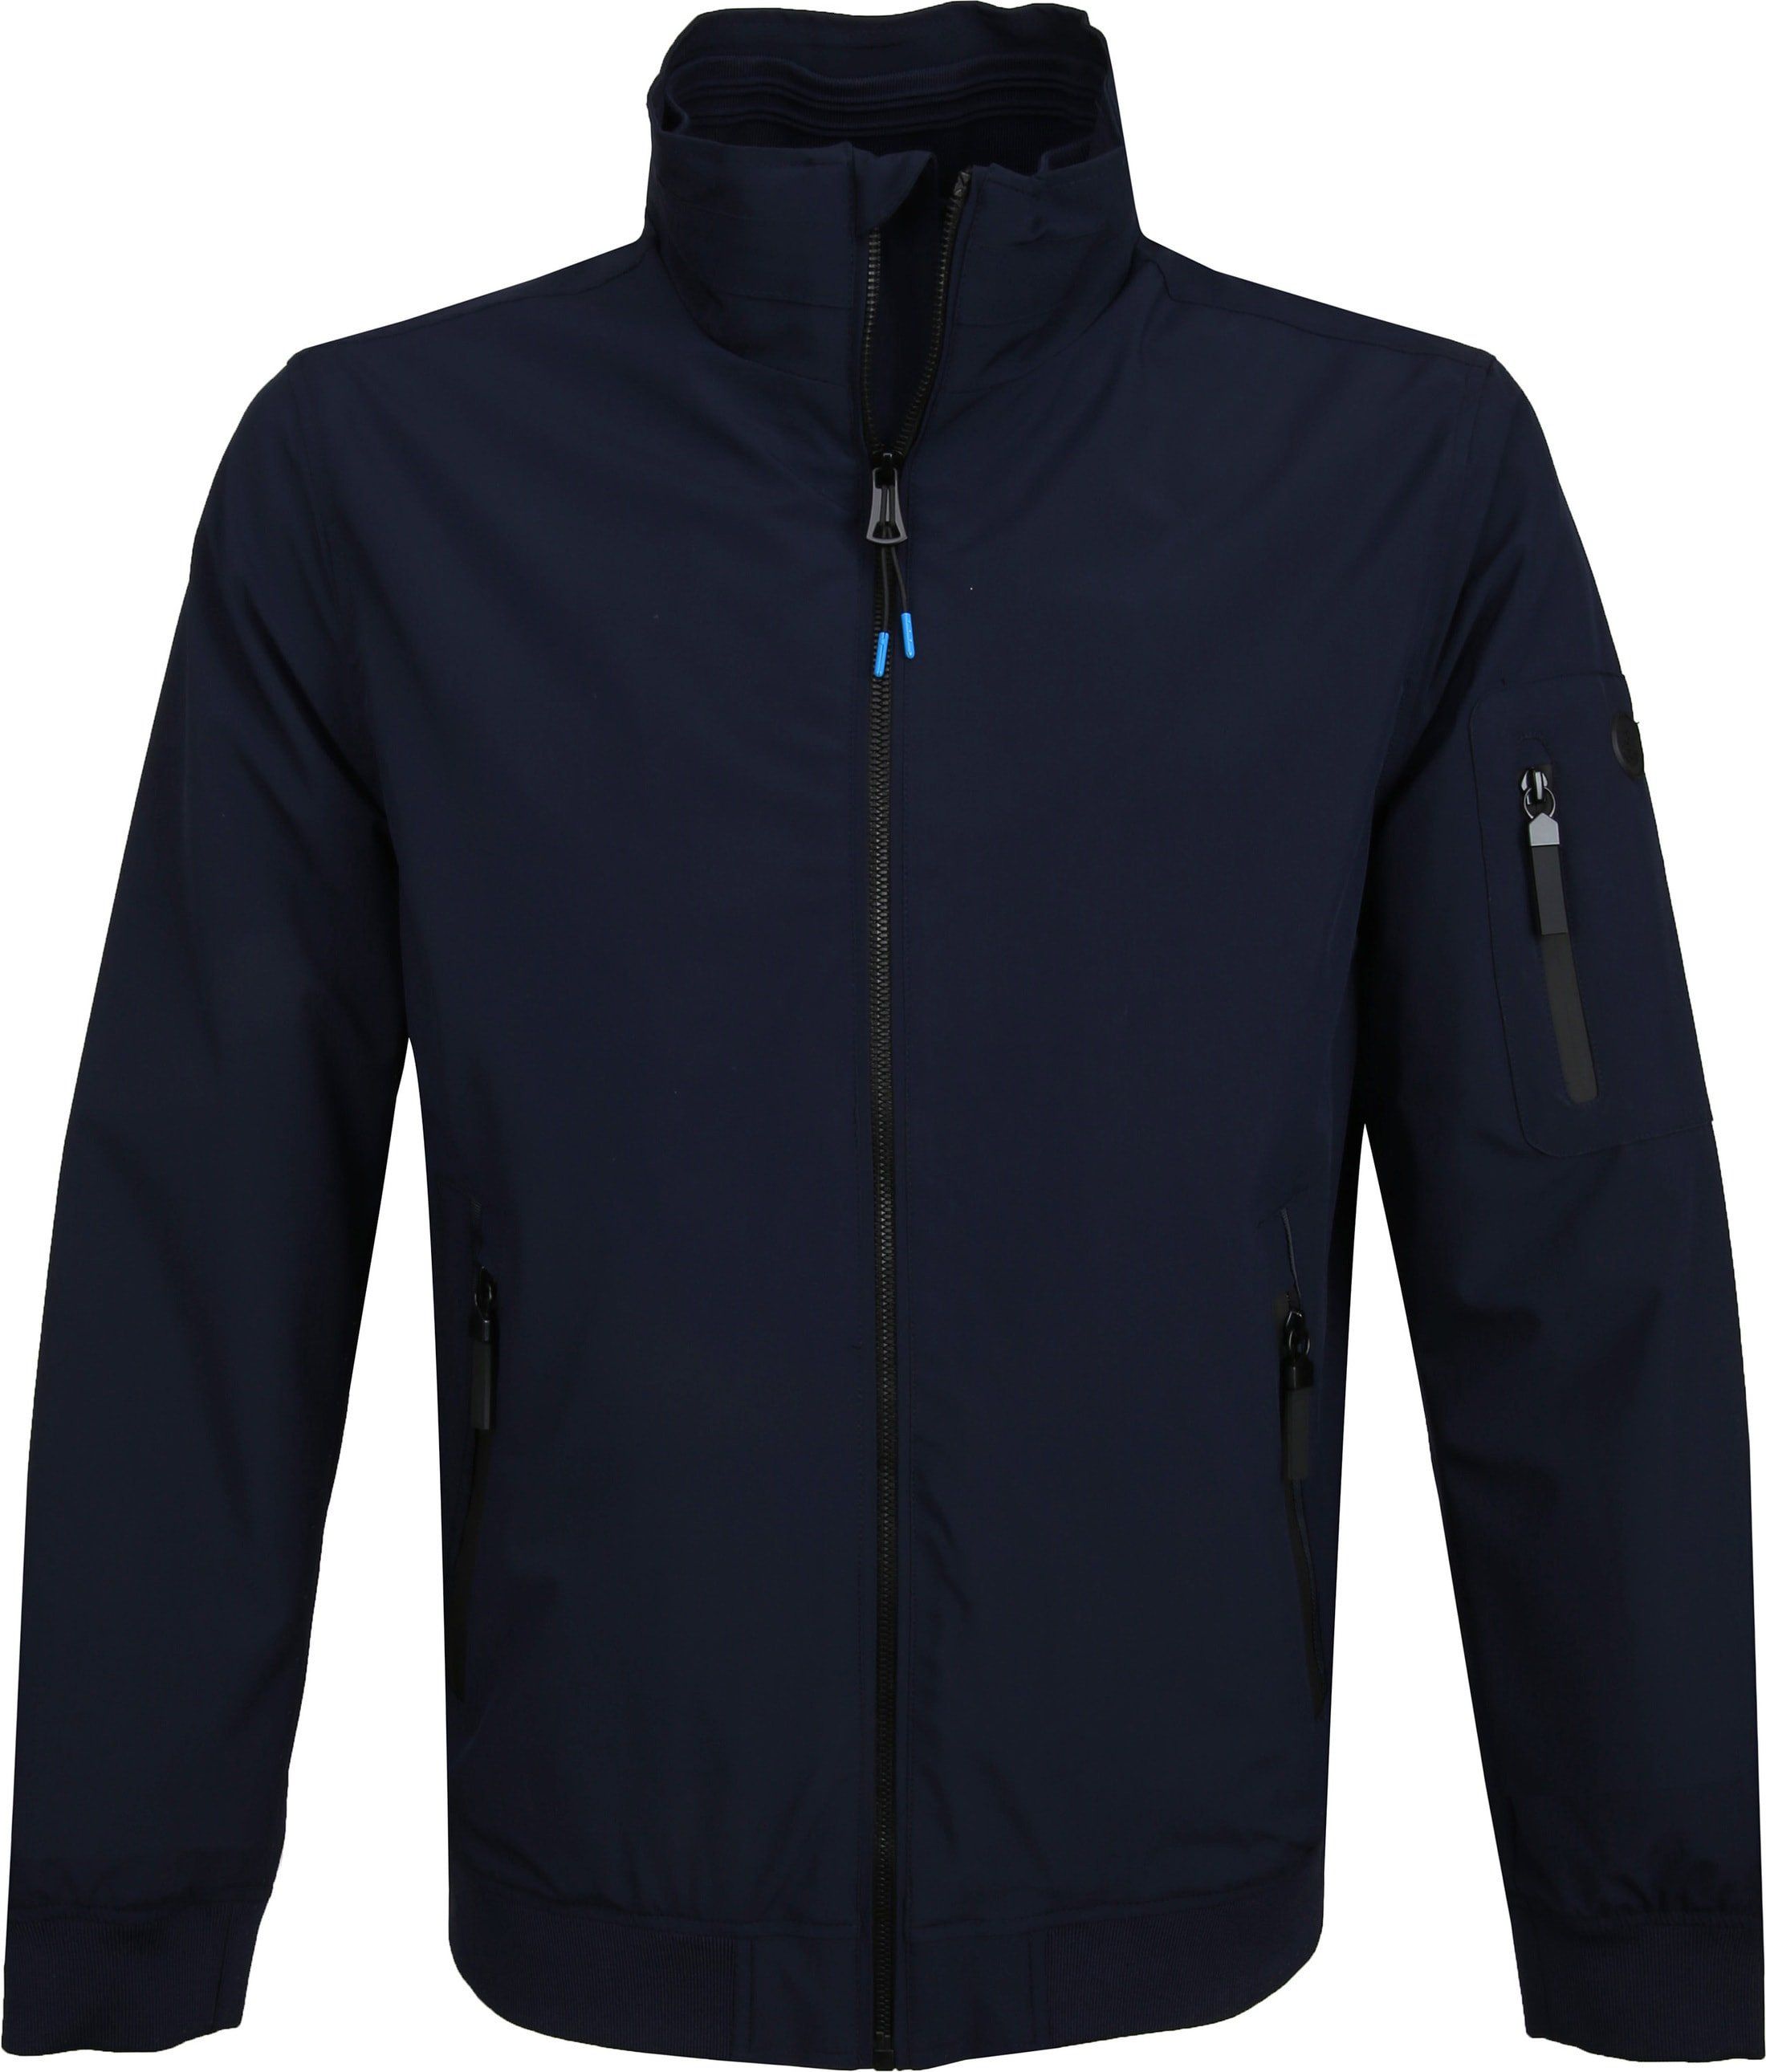 Suitable Jacket Sven Navy Dark Blue size L